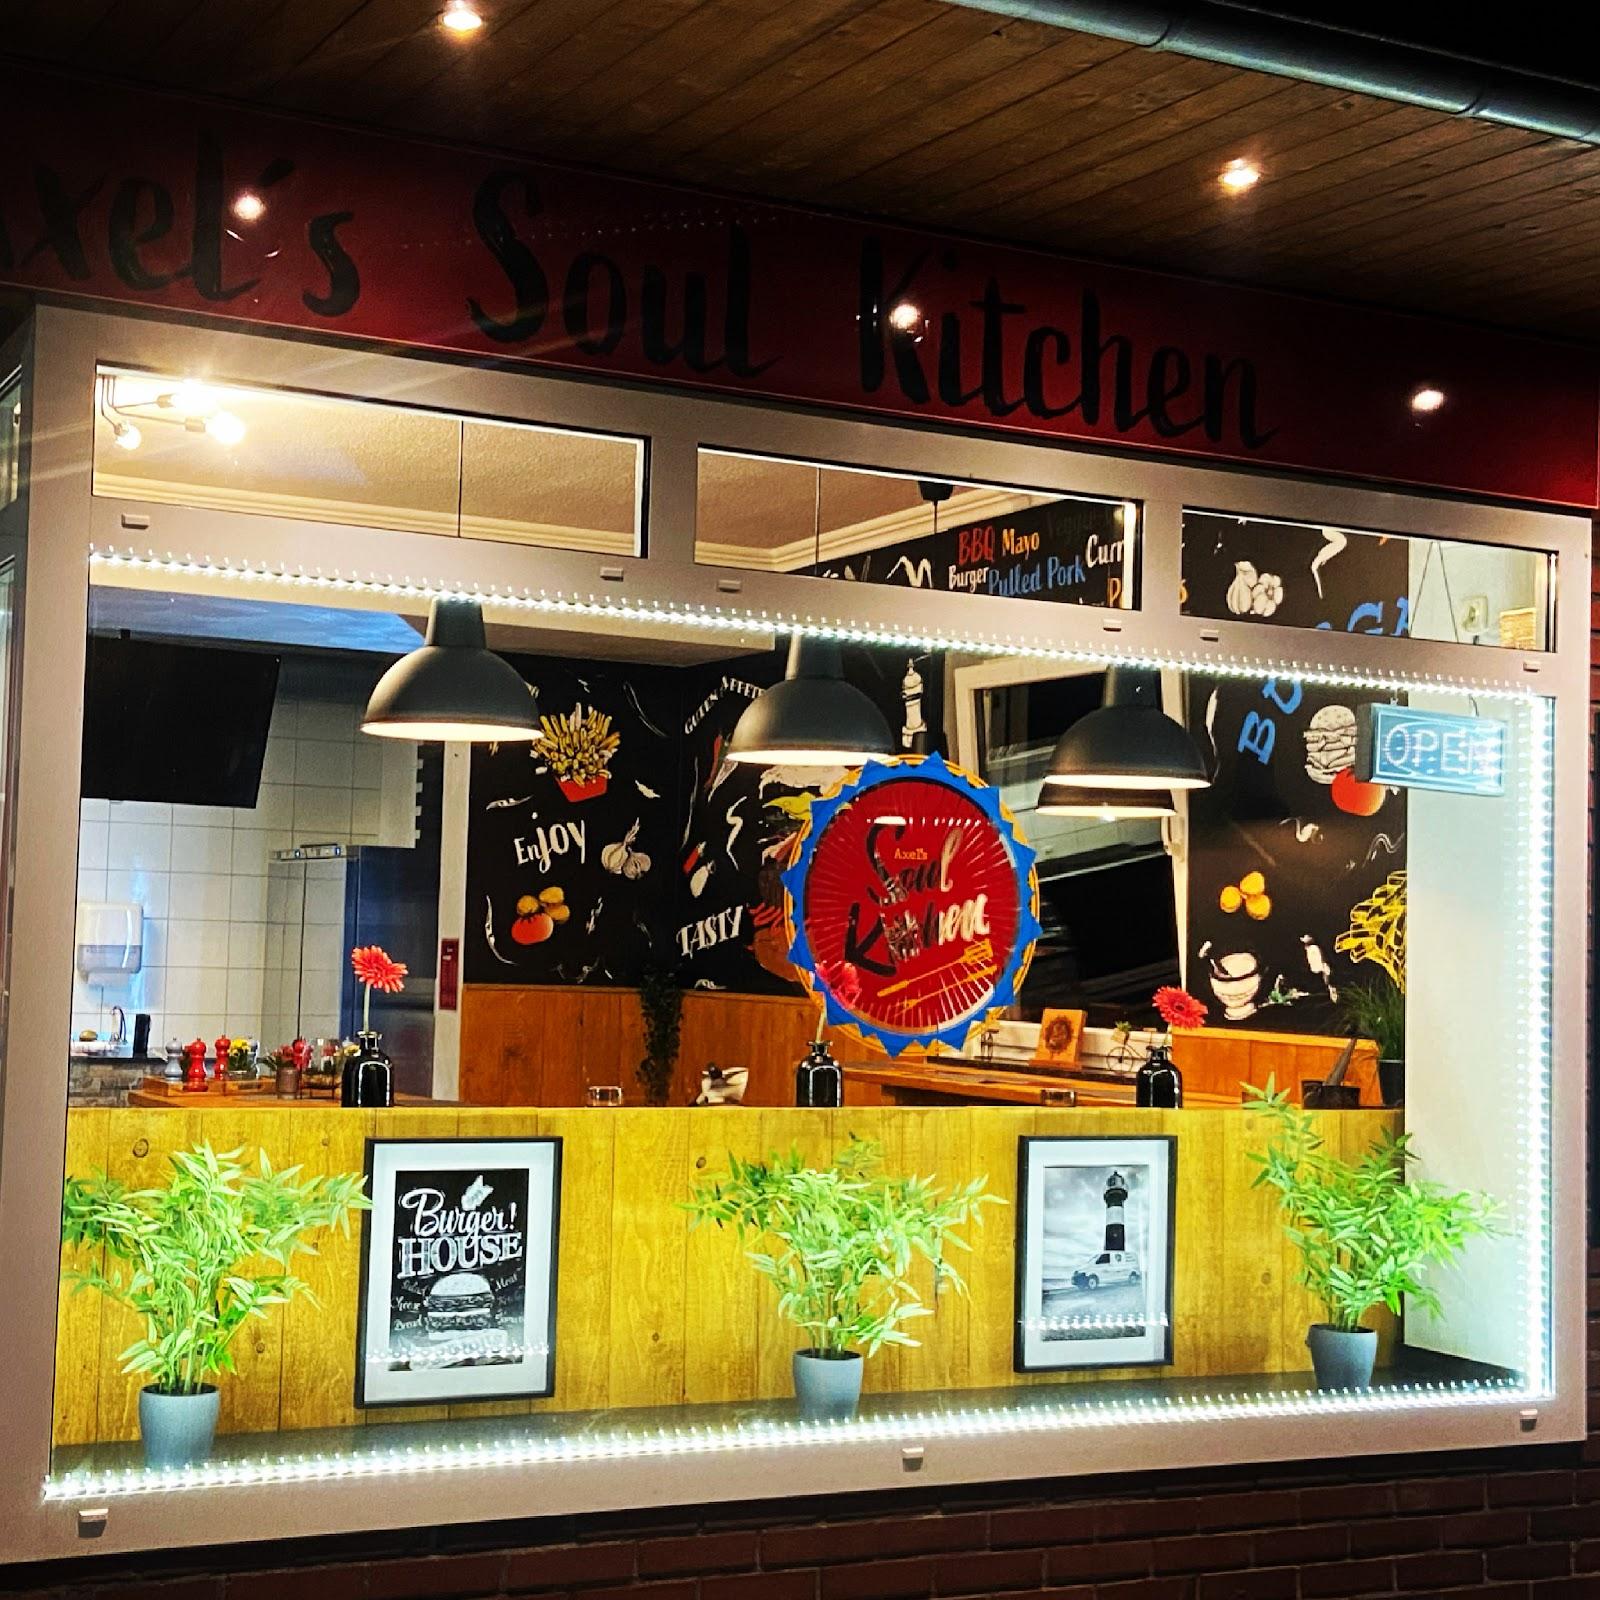 Restaurant "Axel’s Soul Kitchen" in Wegberg